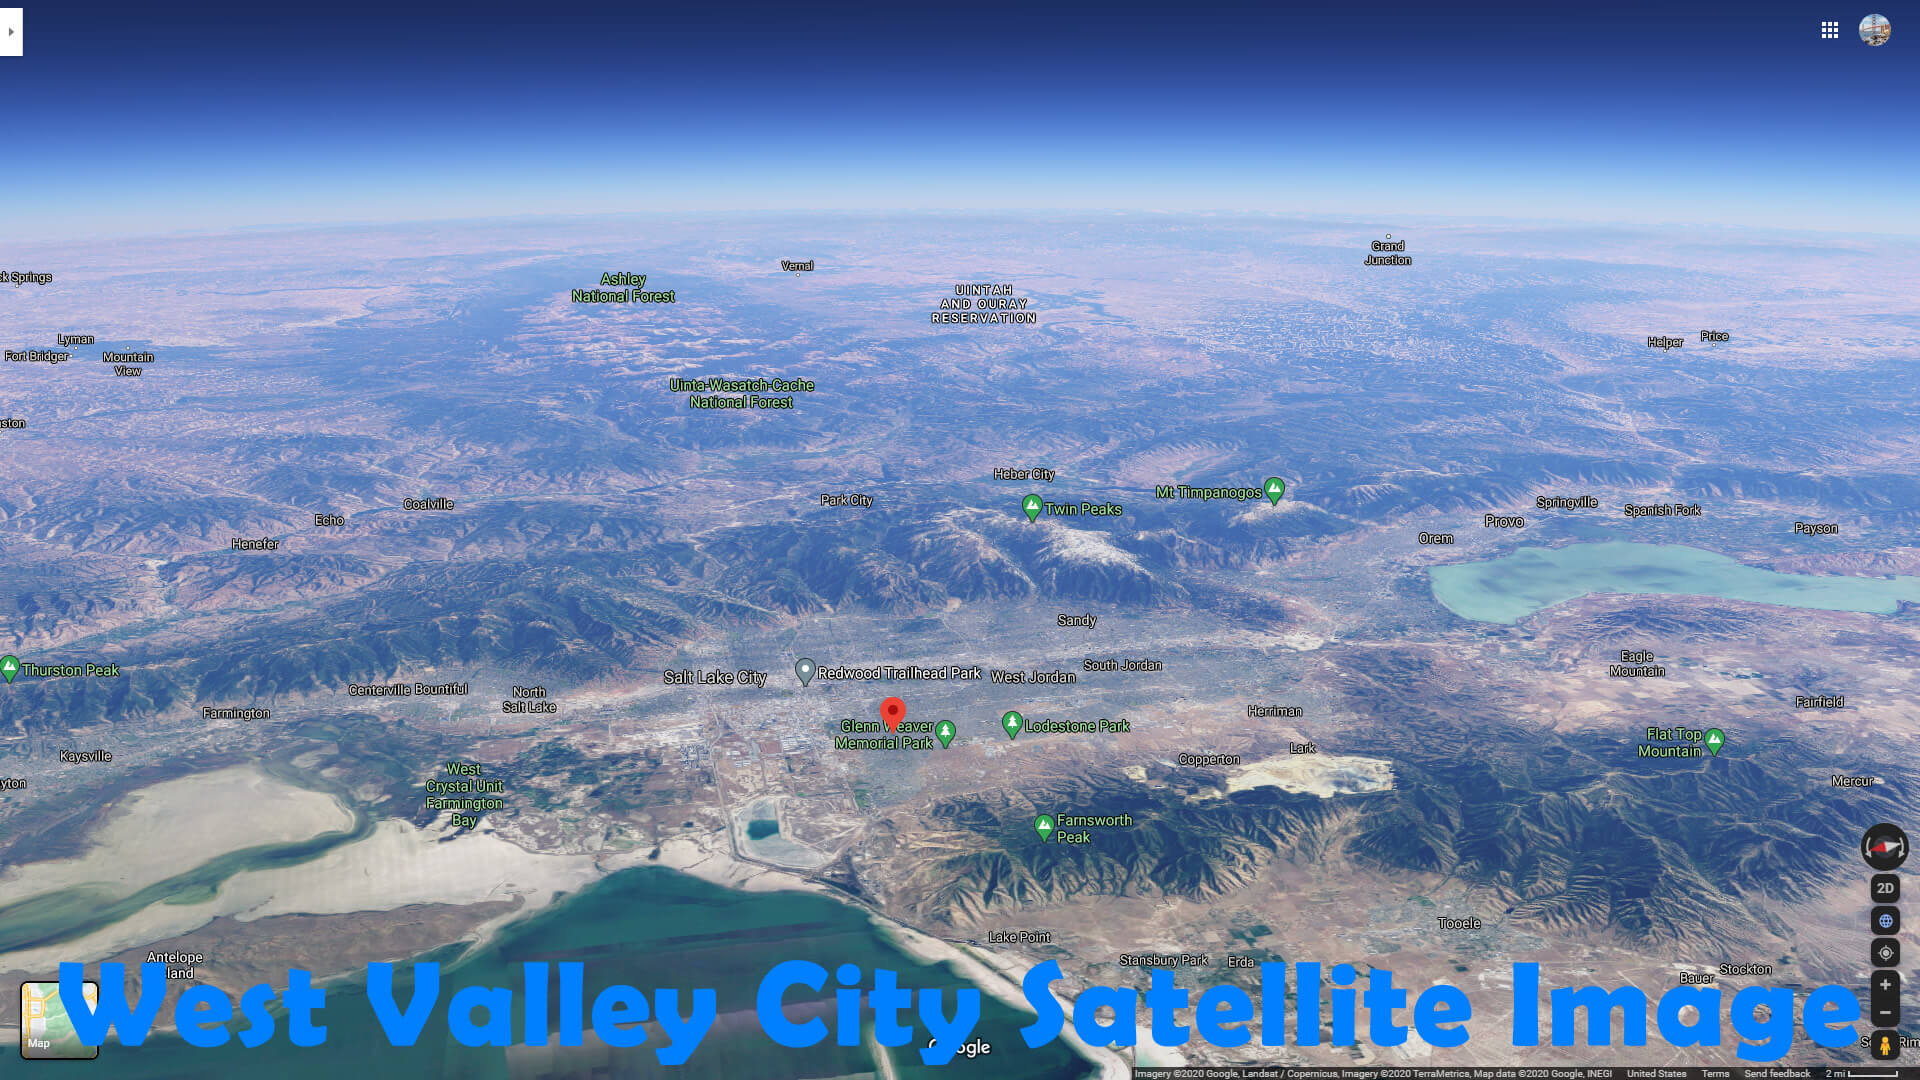 West Valley City Satellite Image